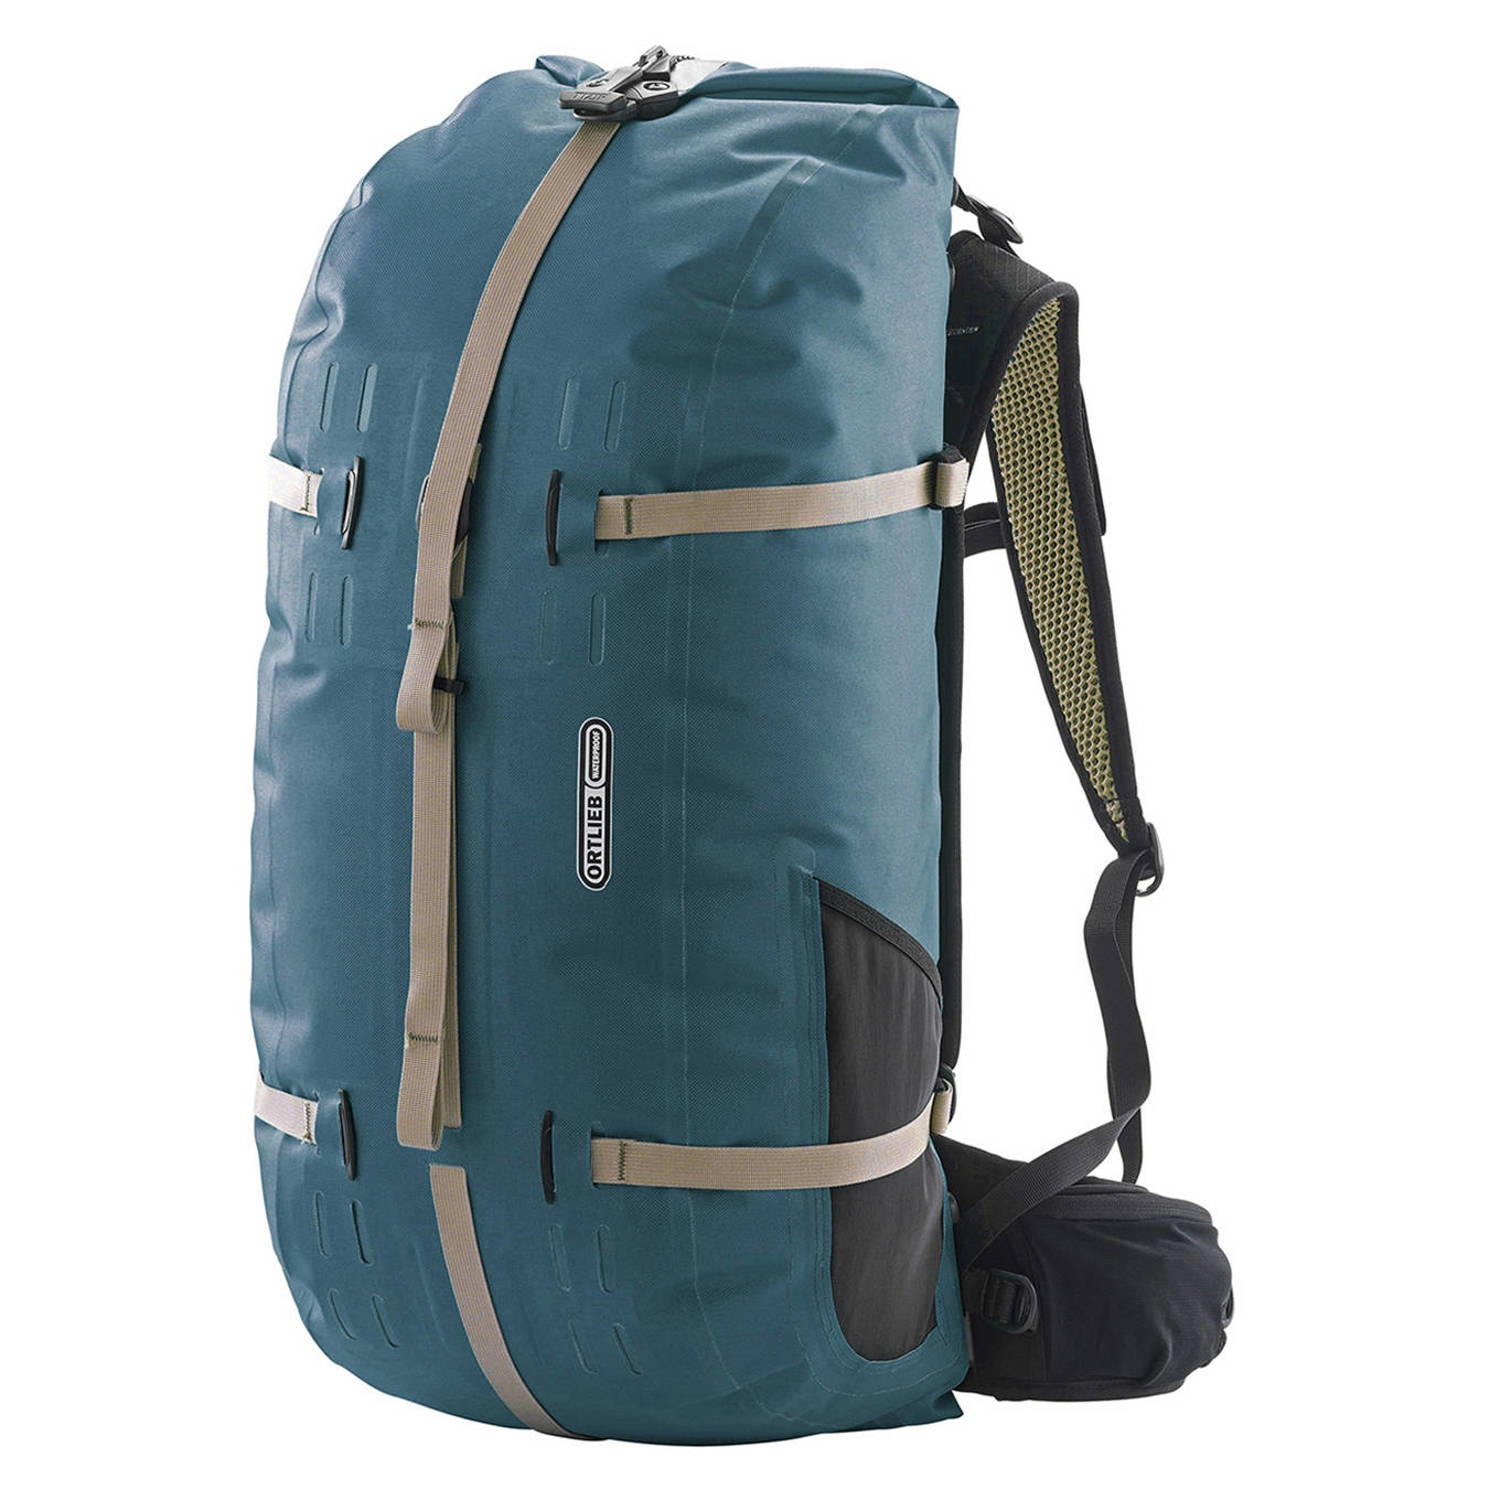 Ortlieb backpack Atrack 45L blauw